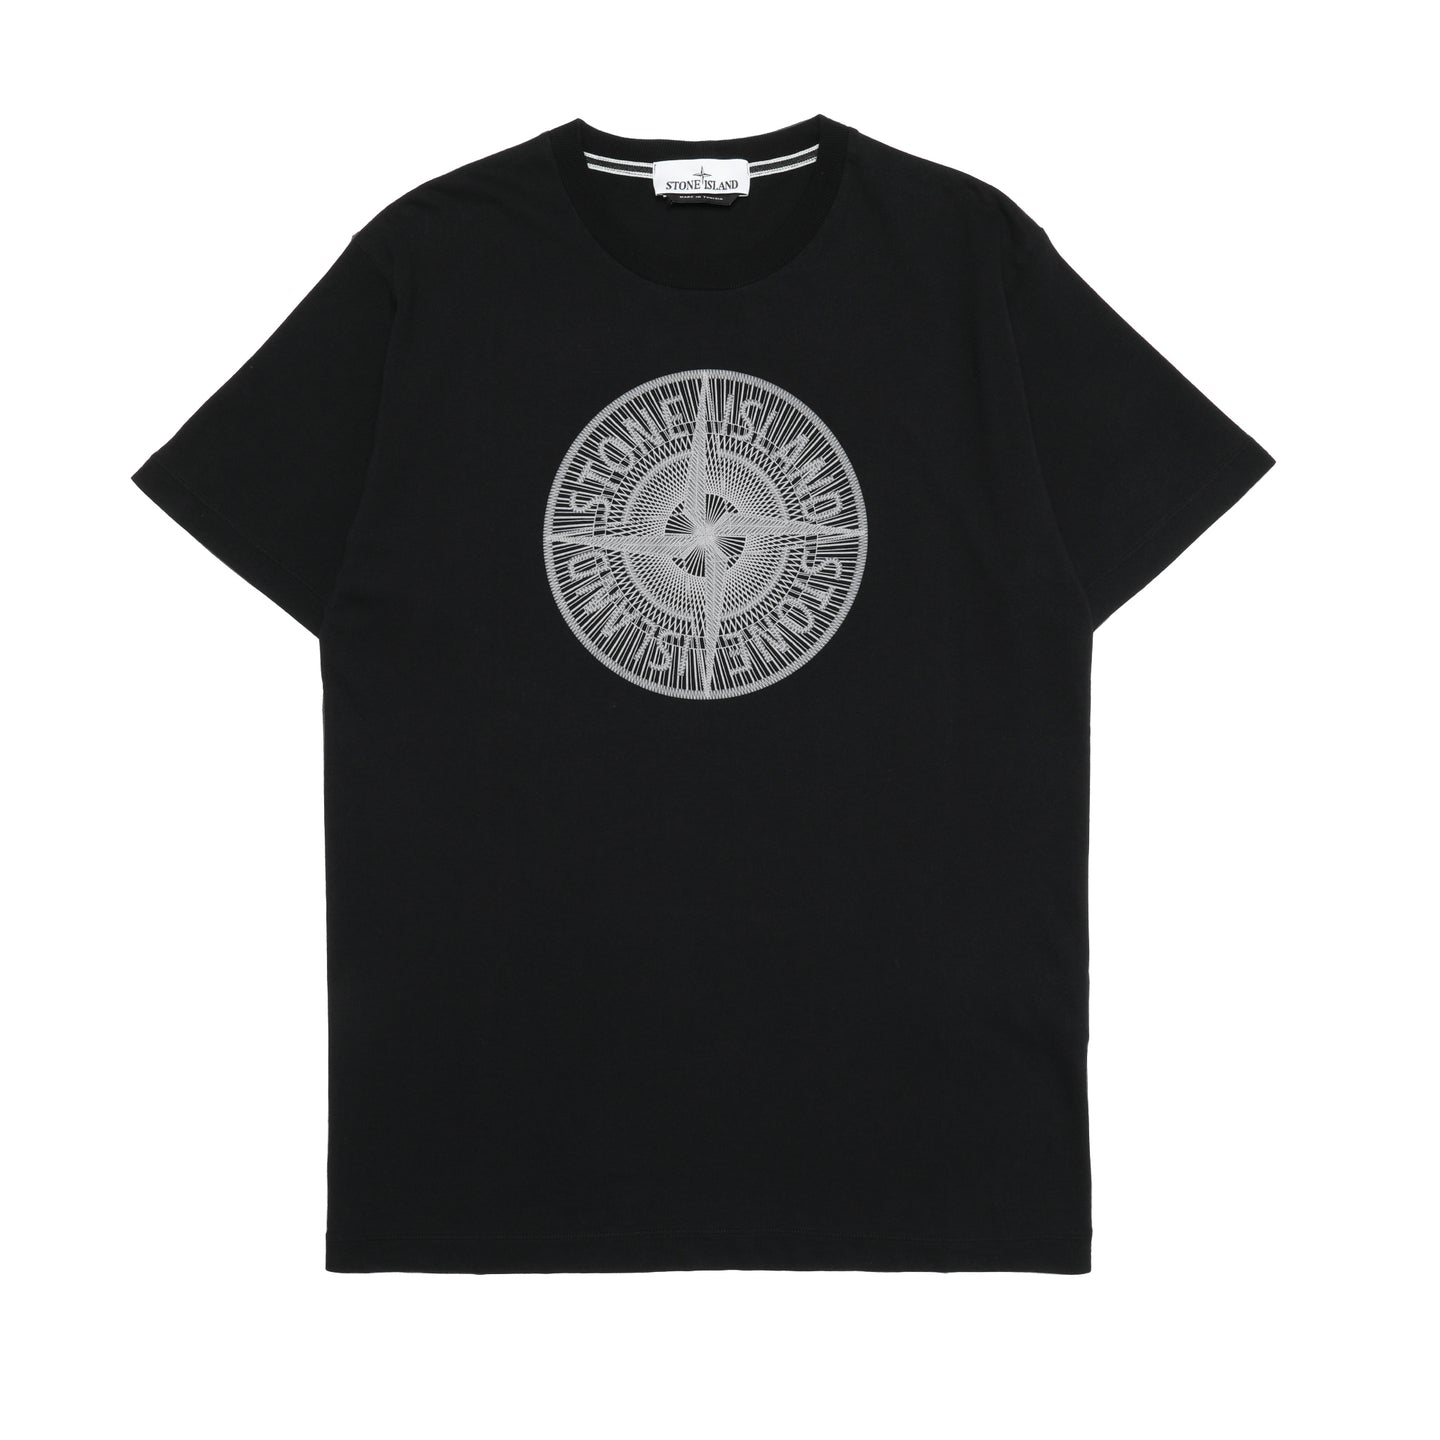 Stone Island 'Industrial Two' Print T-Shirt Black